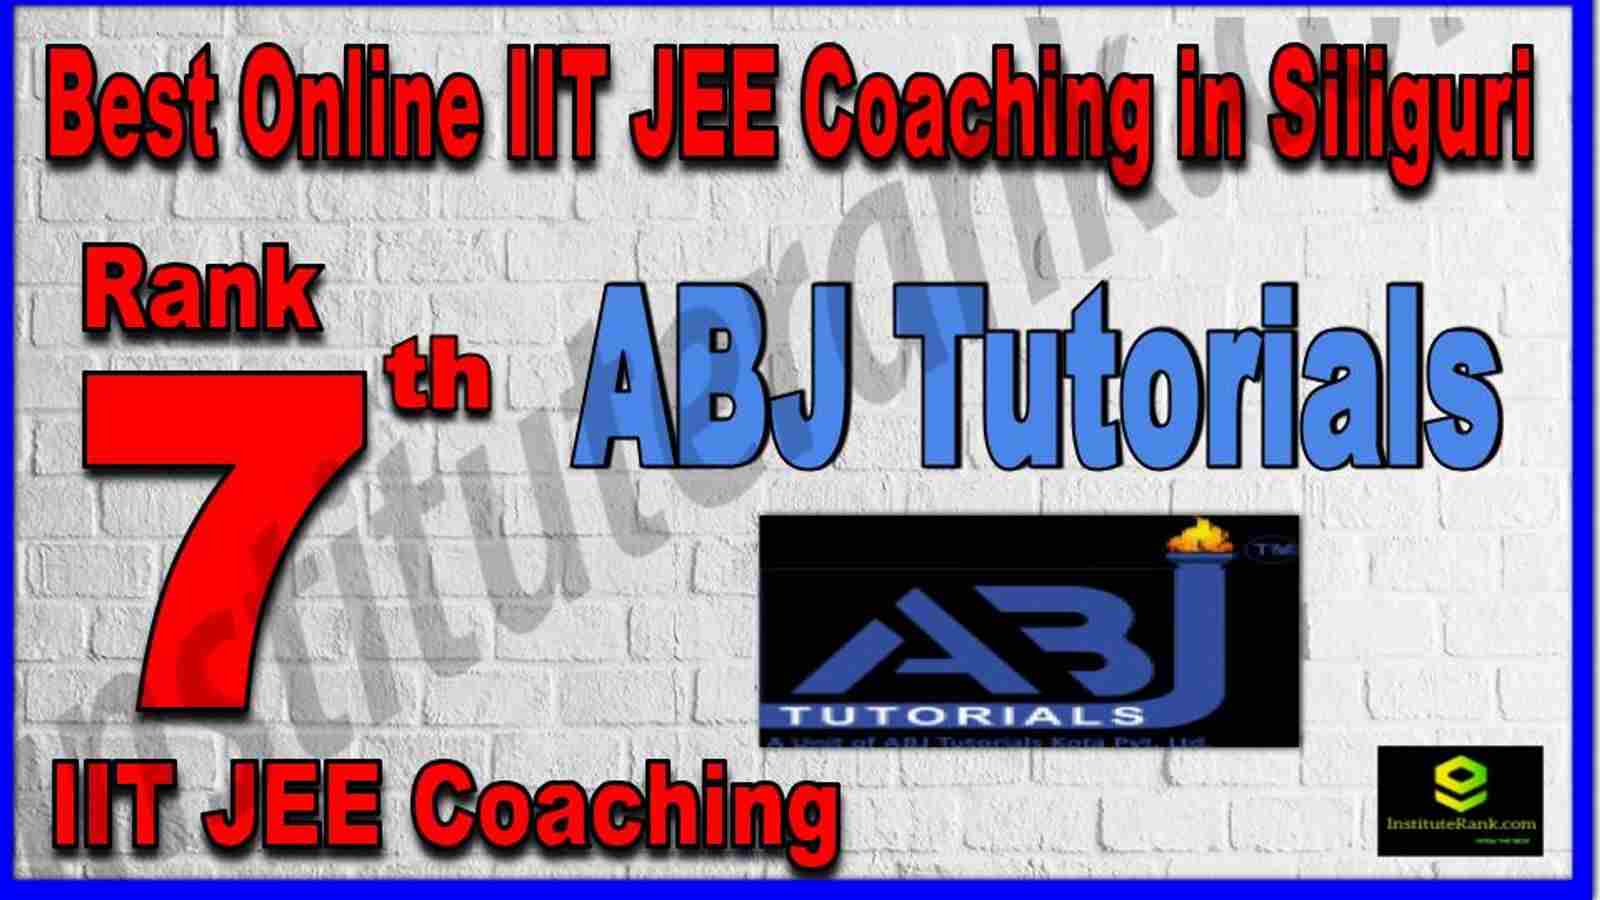 Rank 7th Best Online IIT-JEE Coaching in Siliguri